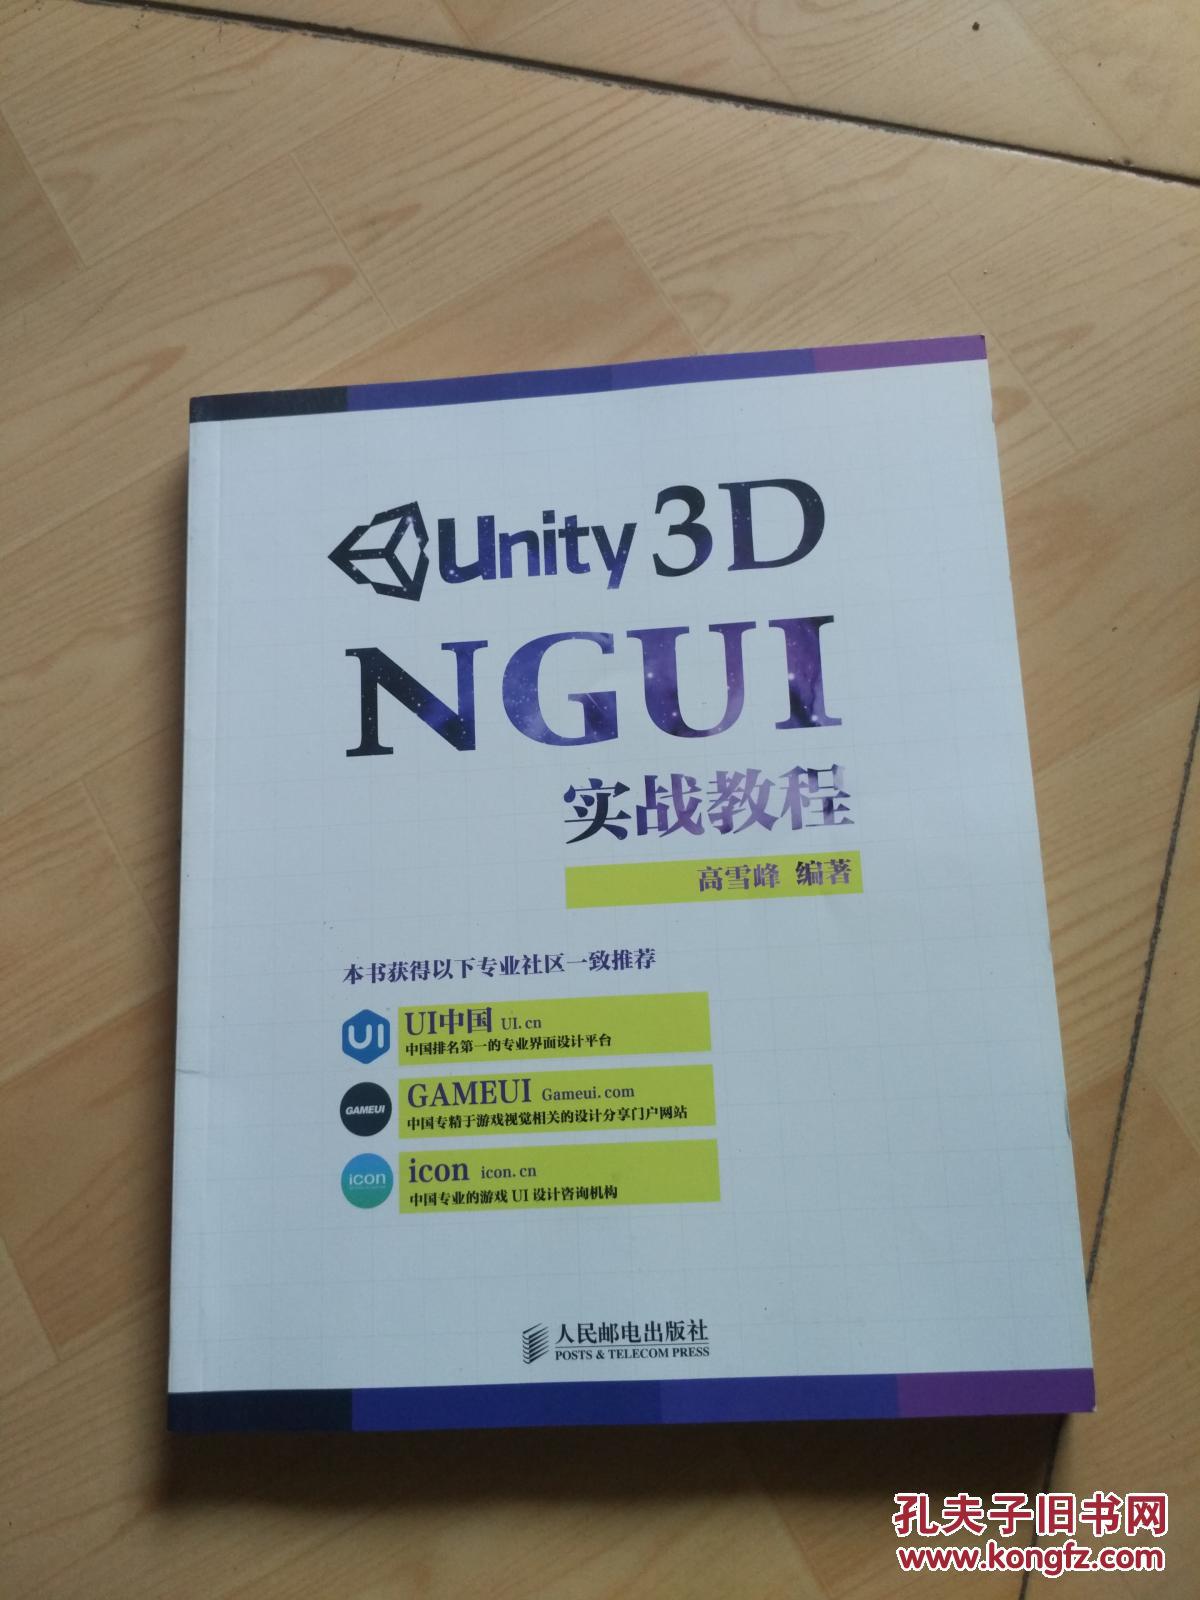 Unity 3D NGUI 实战教程